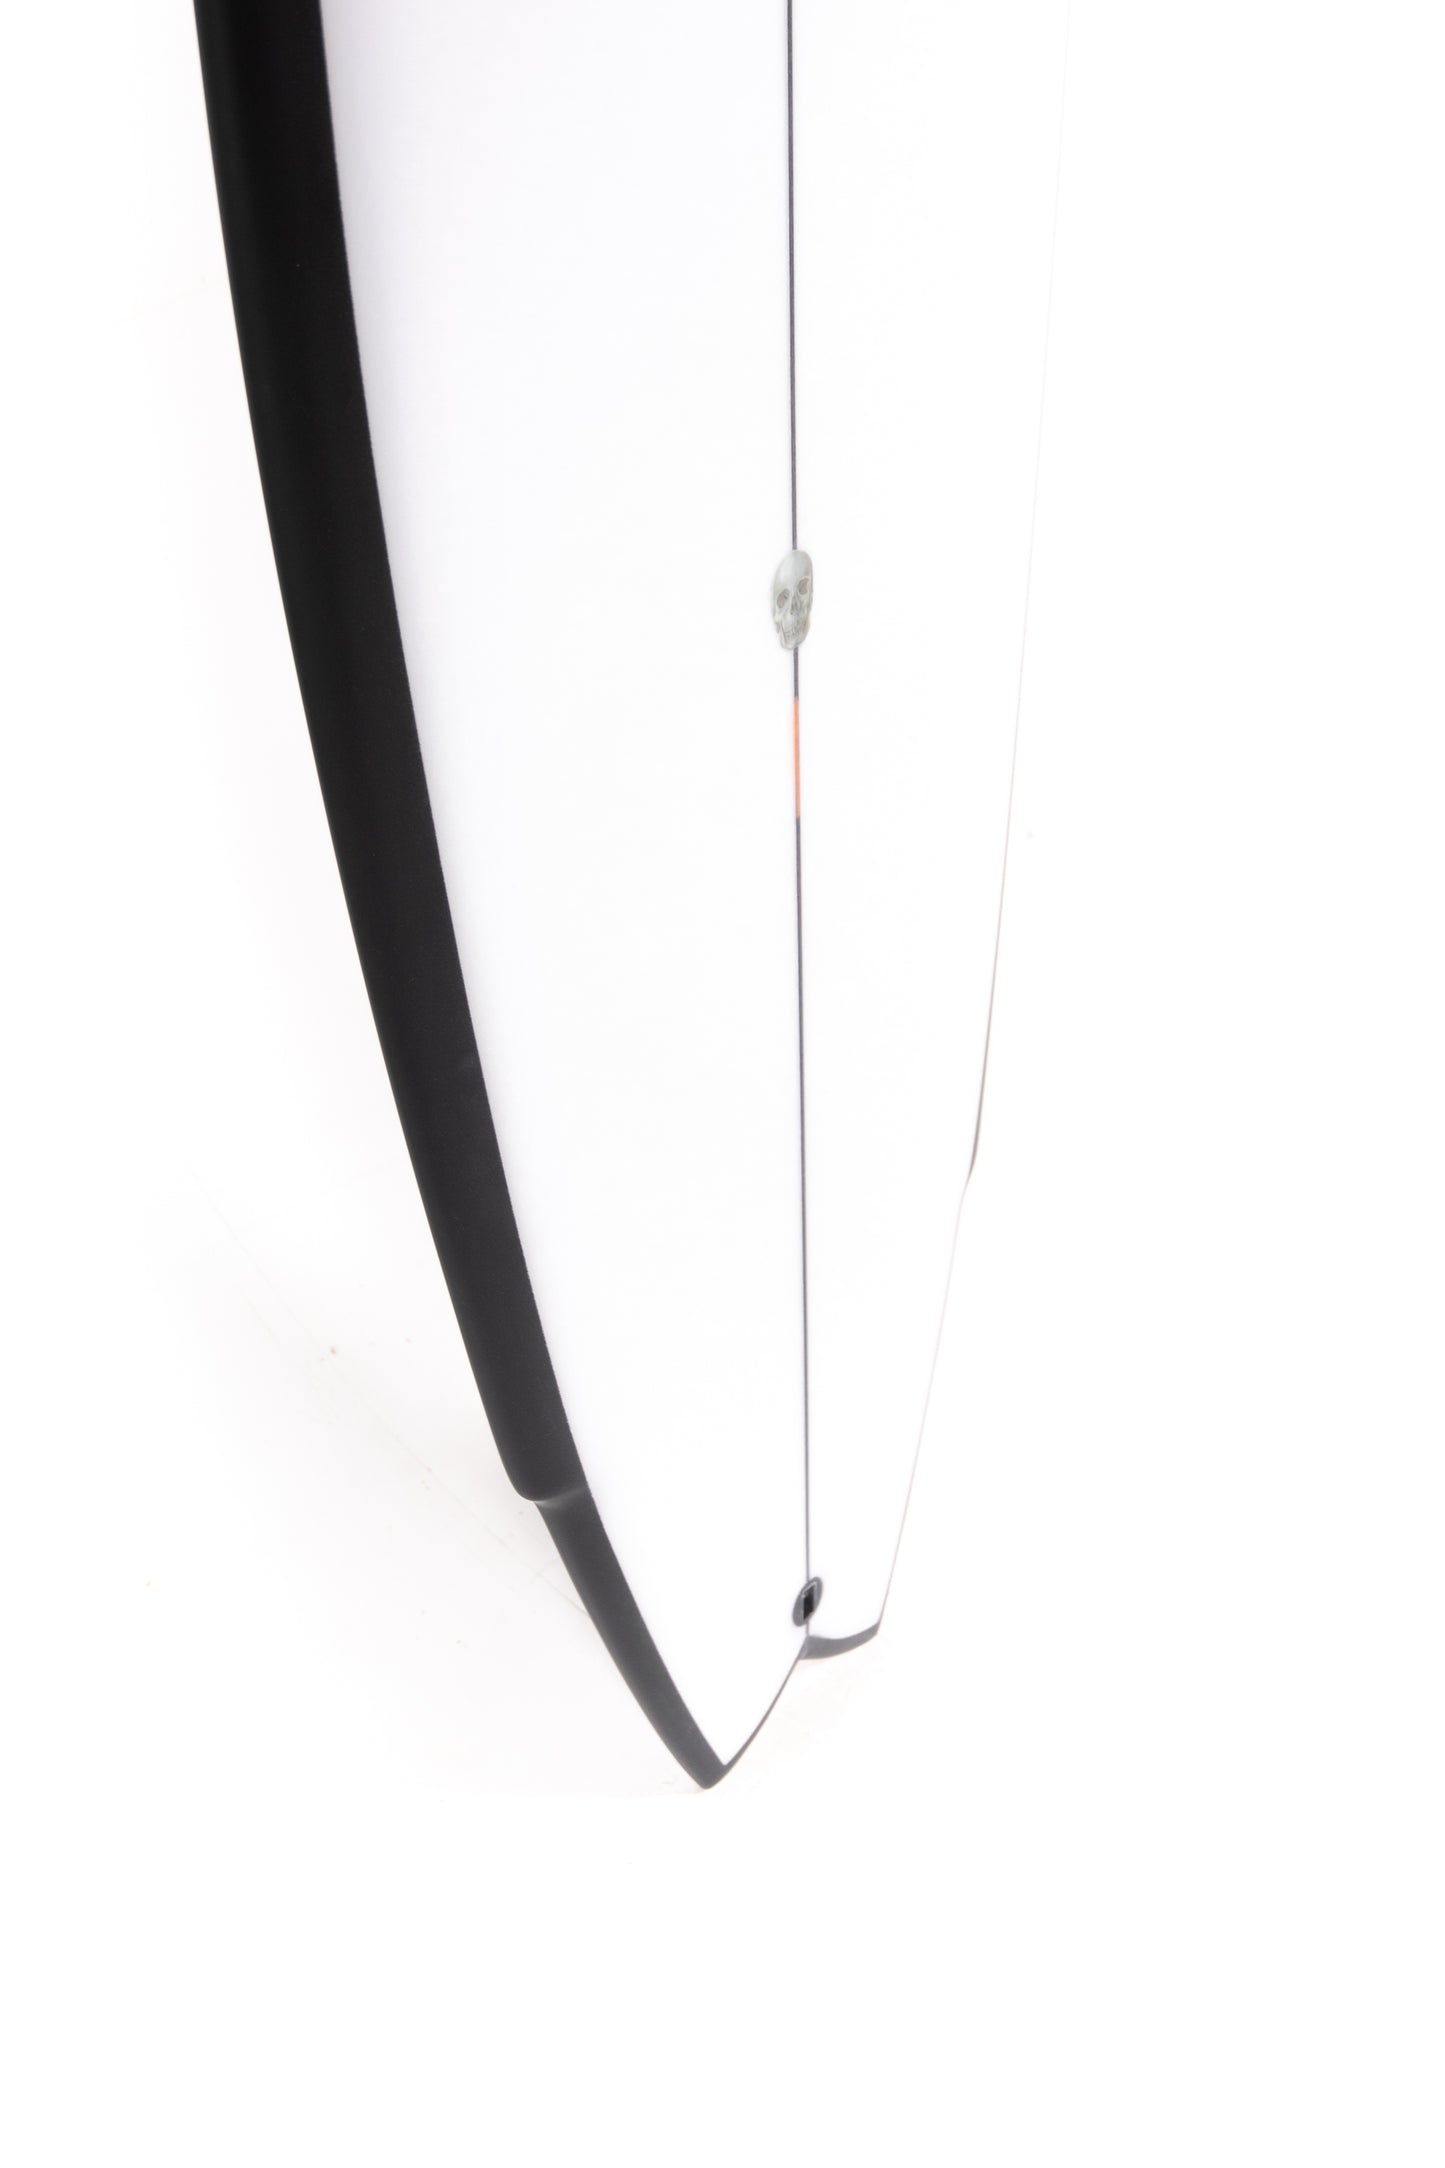 
                  
                    Pukas Surf Shop - Christenson Surfboards - LANE SPLITTER SWALLOW - 6'1 3/4" x 20 1/2 x 2 3/4 x 37,38L - CX05820
                  
                